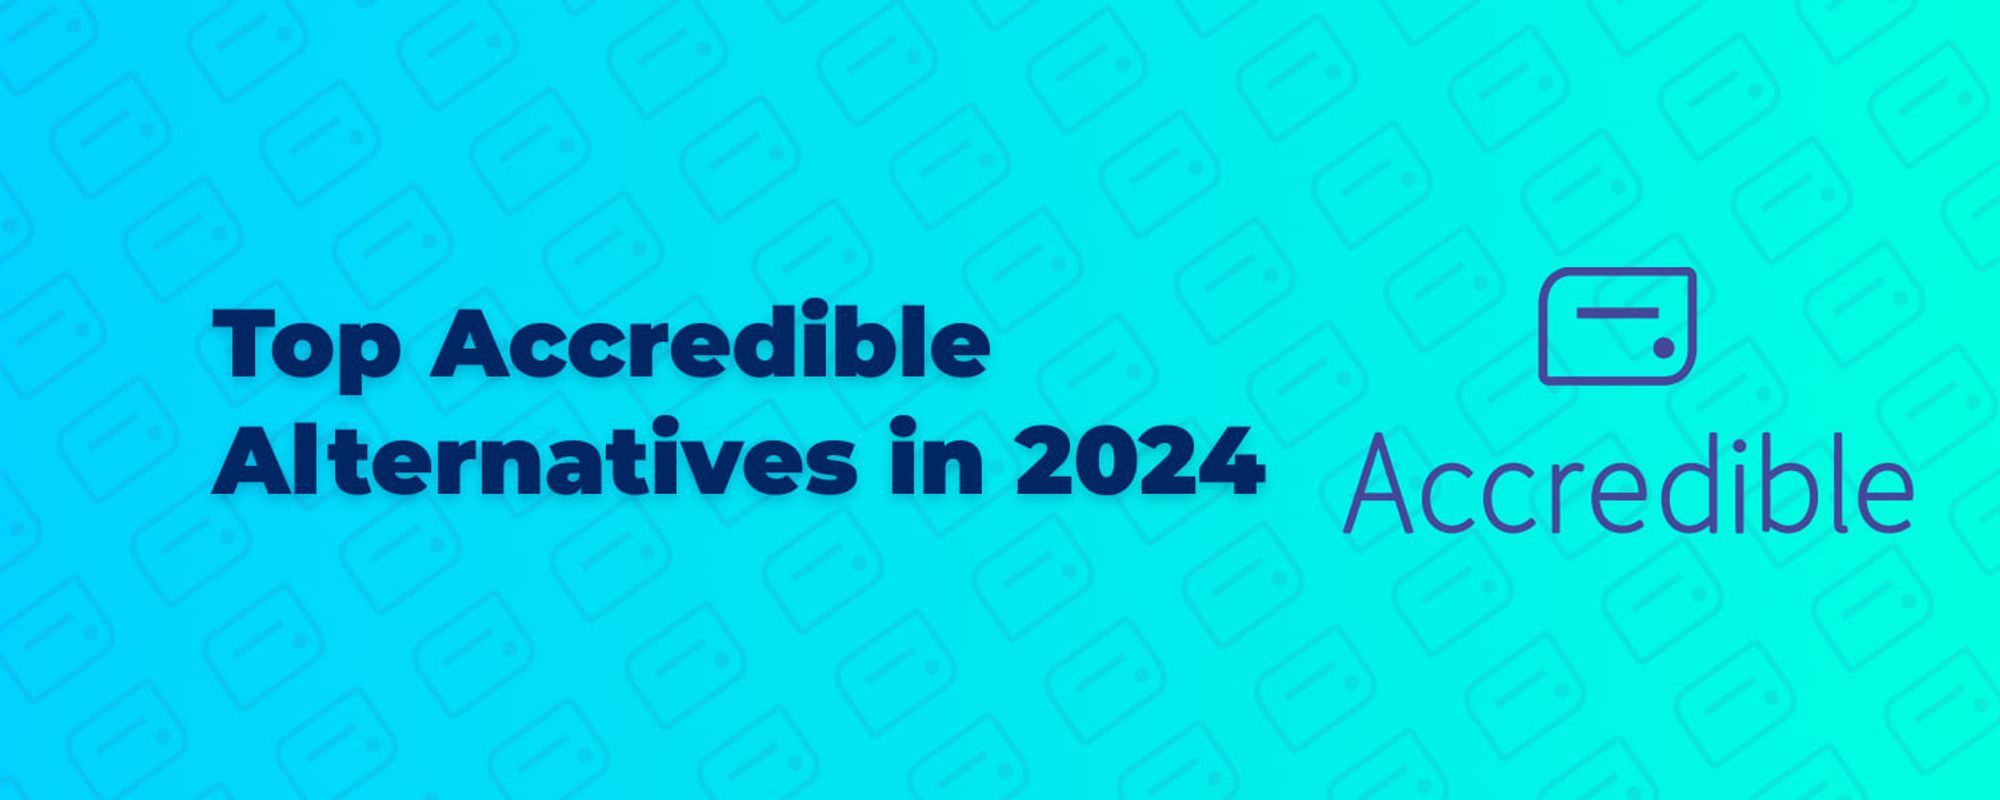 Top 3 Accredible Alternatives in 2024